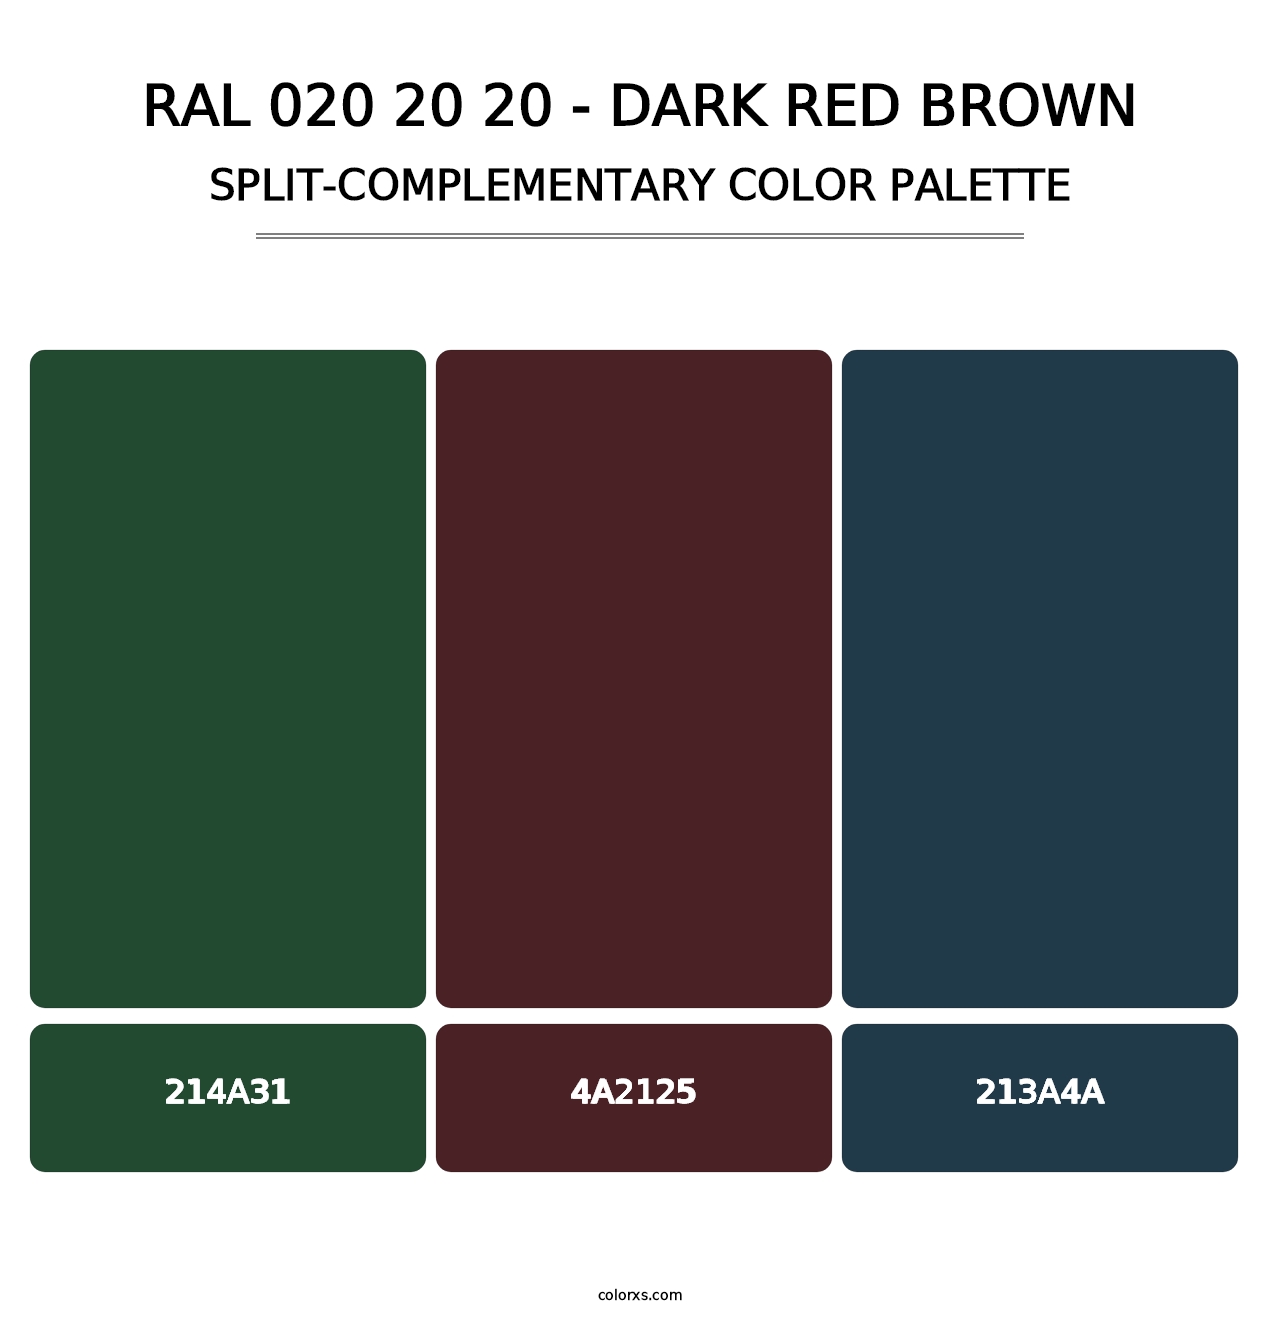 RAL 020 20 20 - Dark Red Brown - Split-Complementary Color Palette